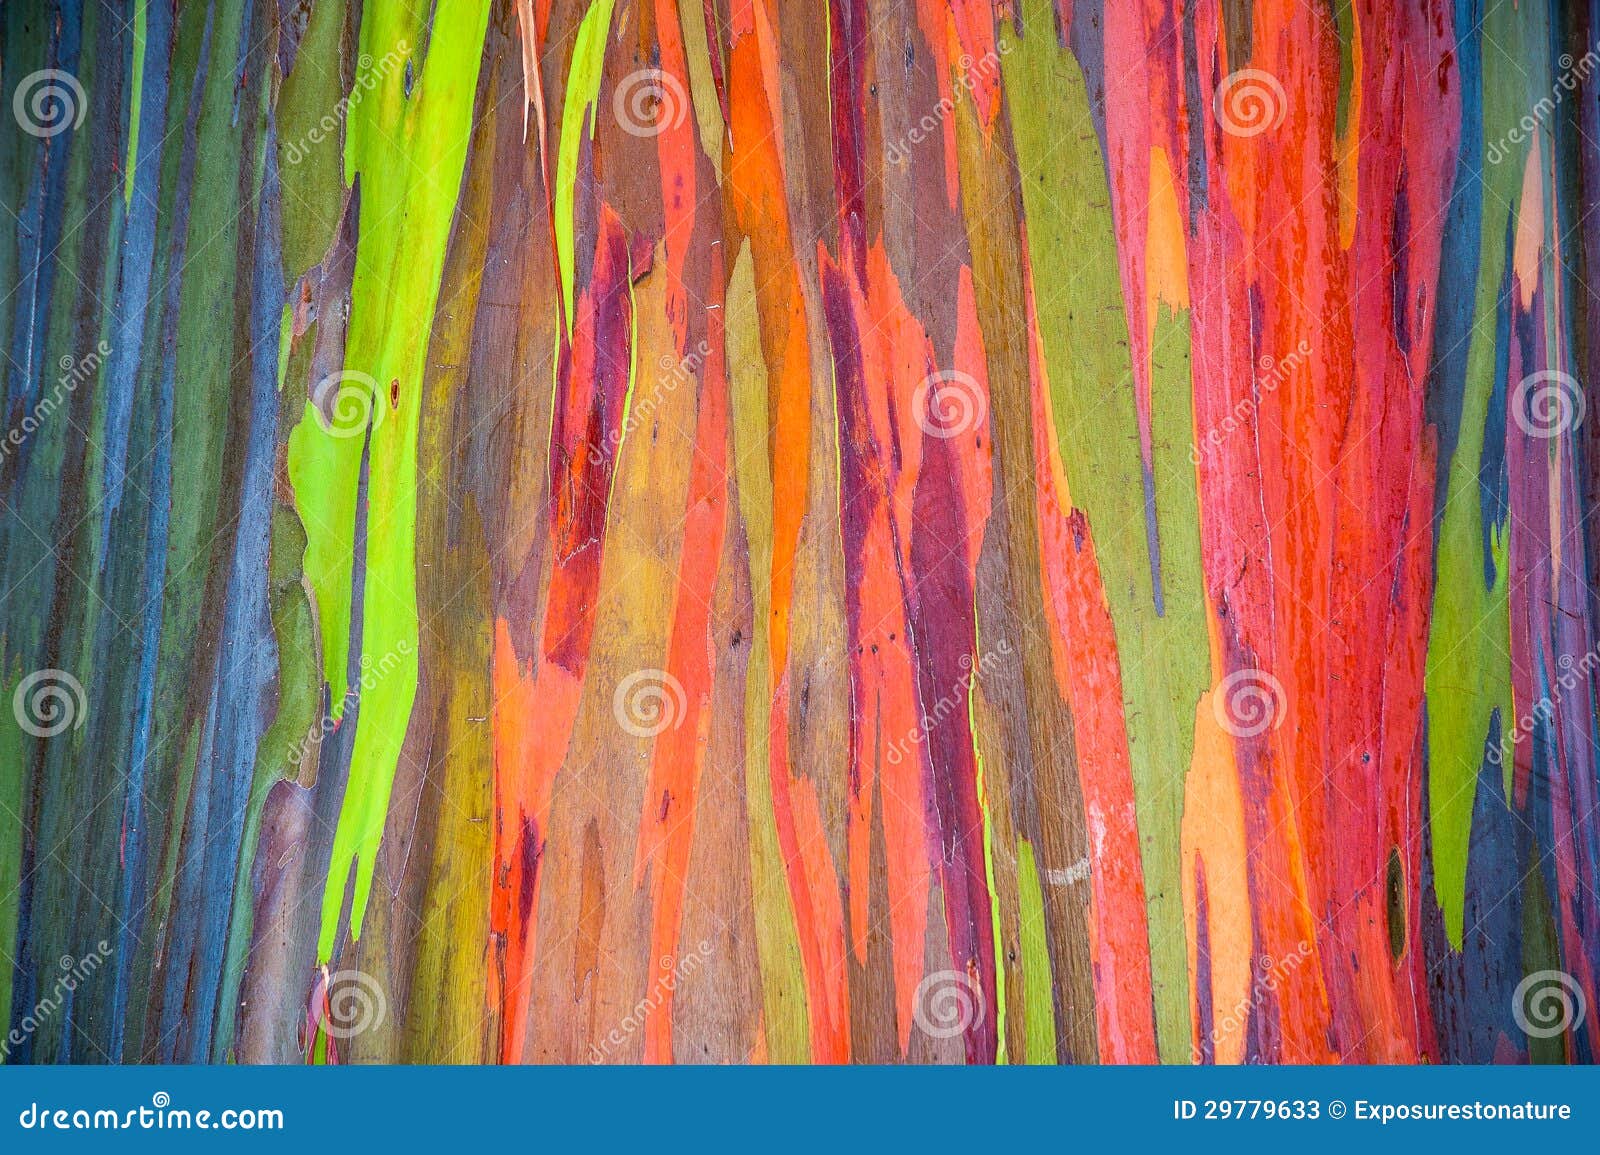 horizontal rainbow eucalyptus tree bark